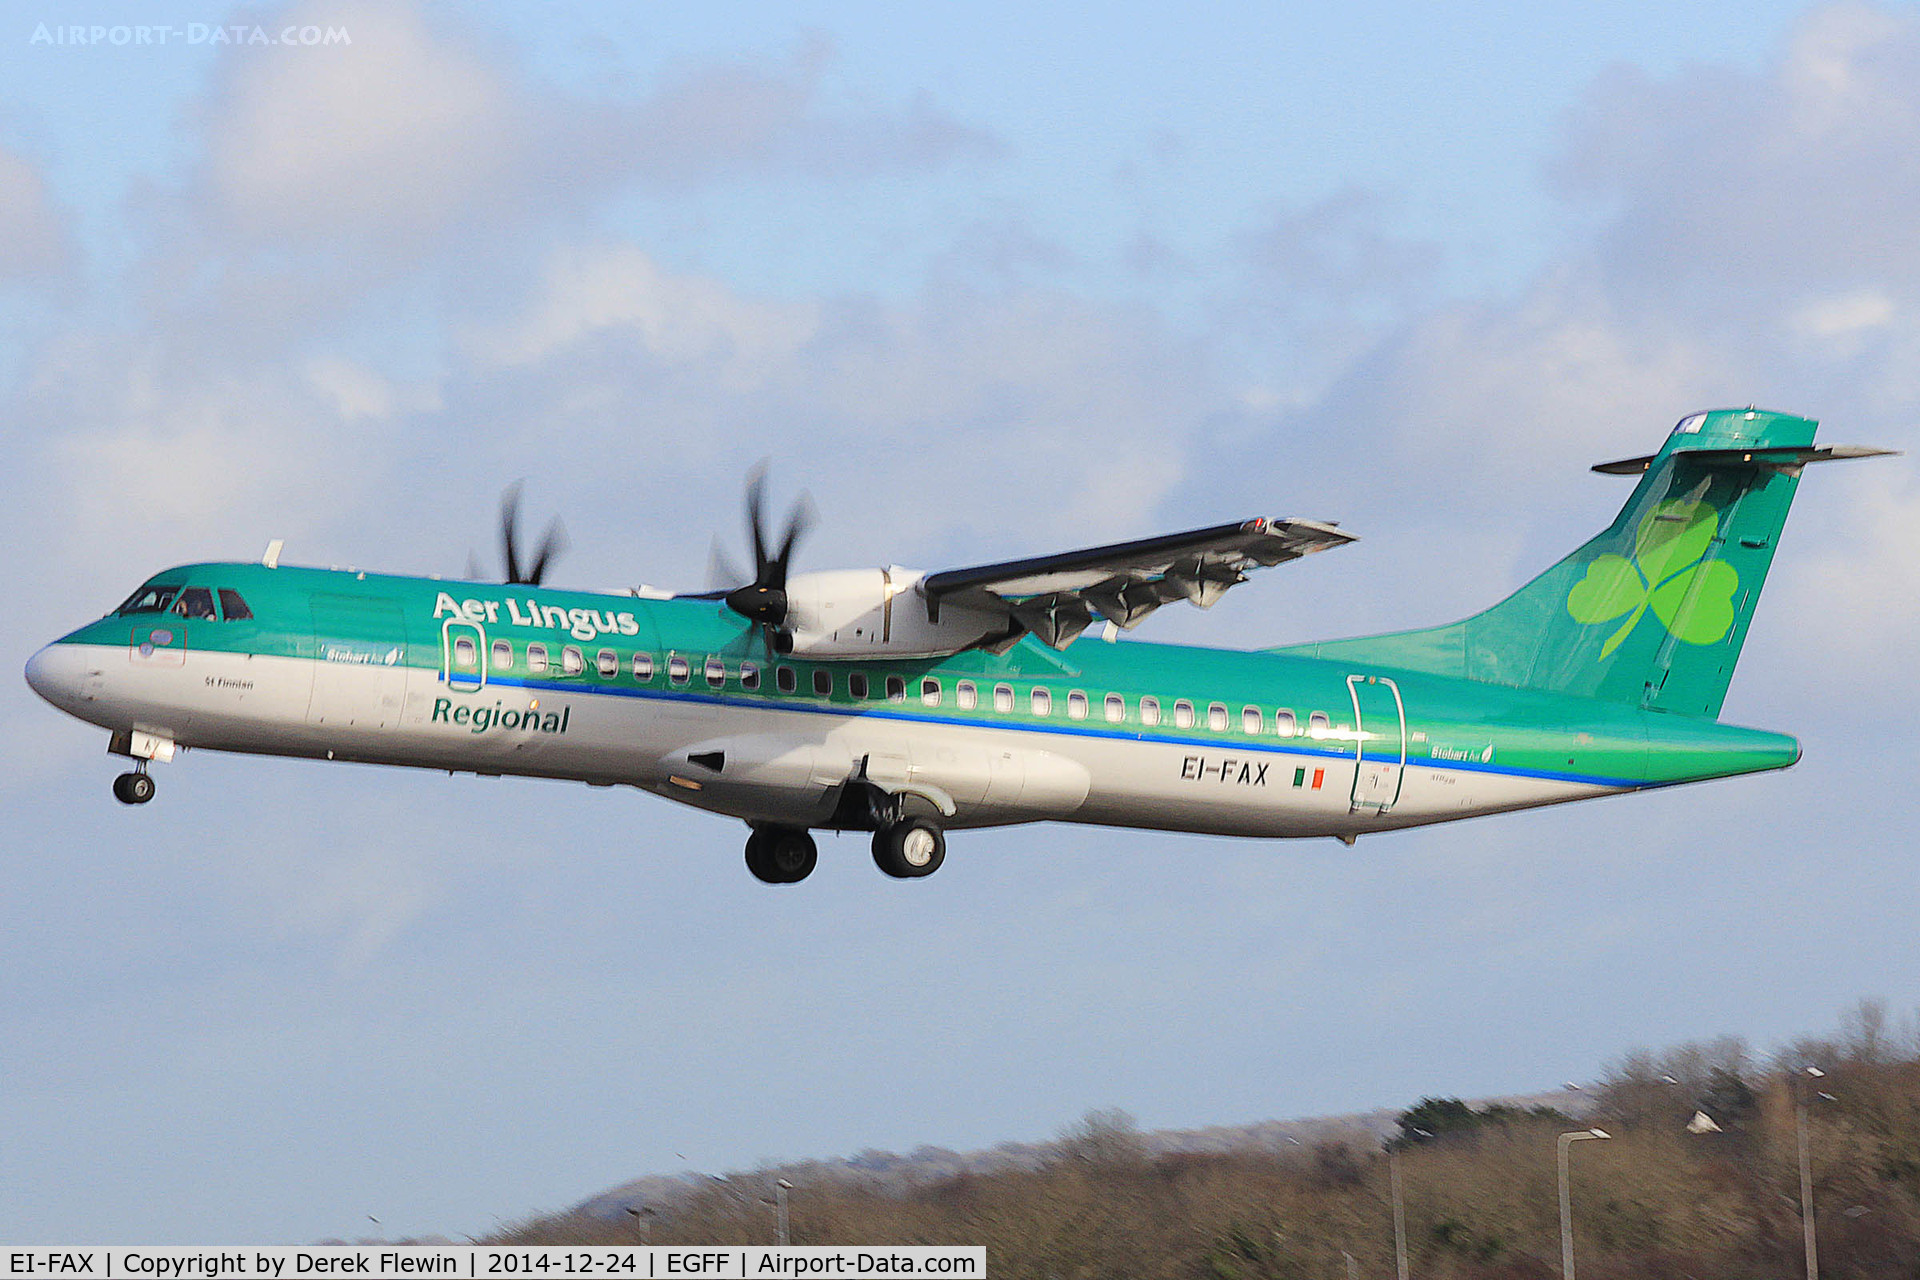 EI-FAX, 2013 ATR 72-600 (72-212A) C/N 1129, ATR 72-600, Aer Lingus Regional, operated by Stobart Air, previously F-WWER, callsign Stobart 91CW, seen departing runway 30 at EGFF, en-route to  Dublin.